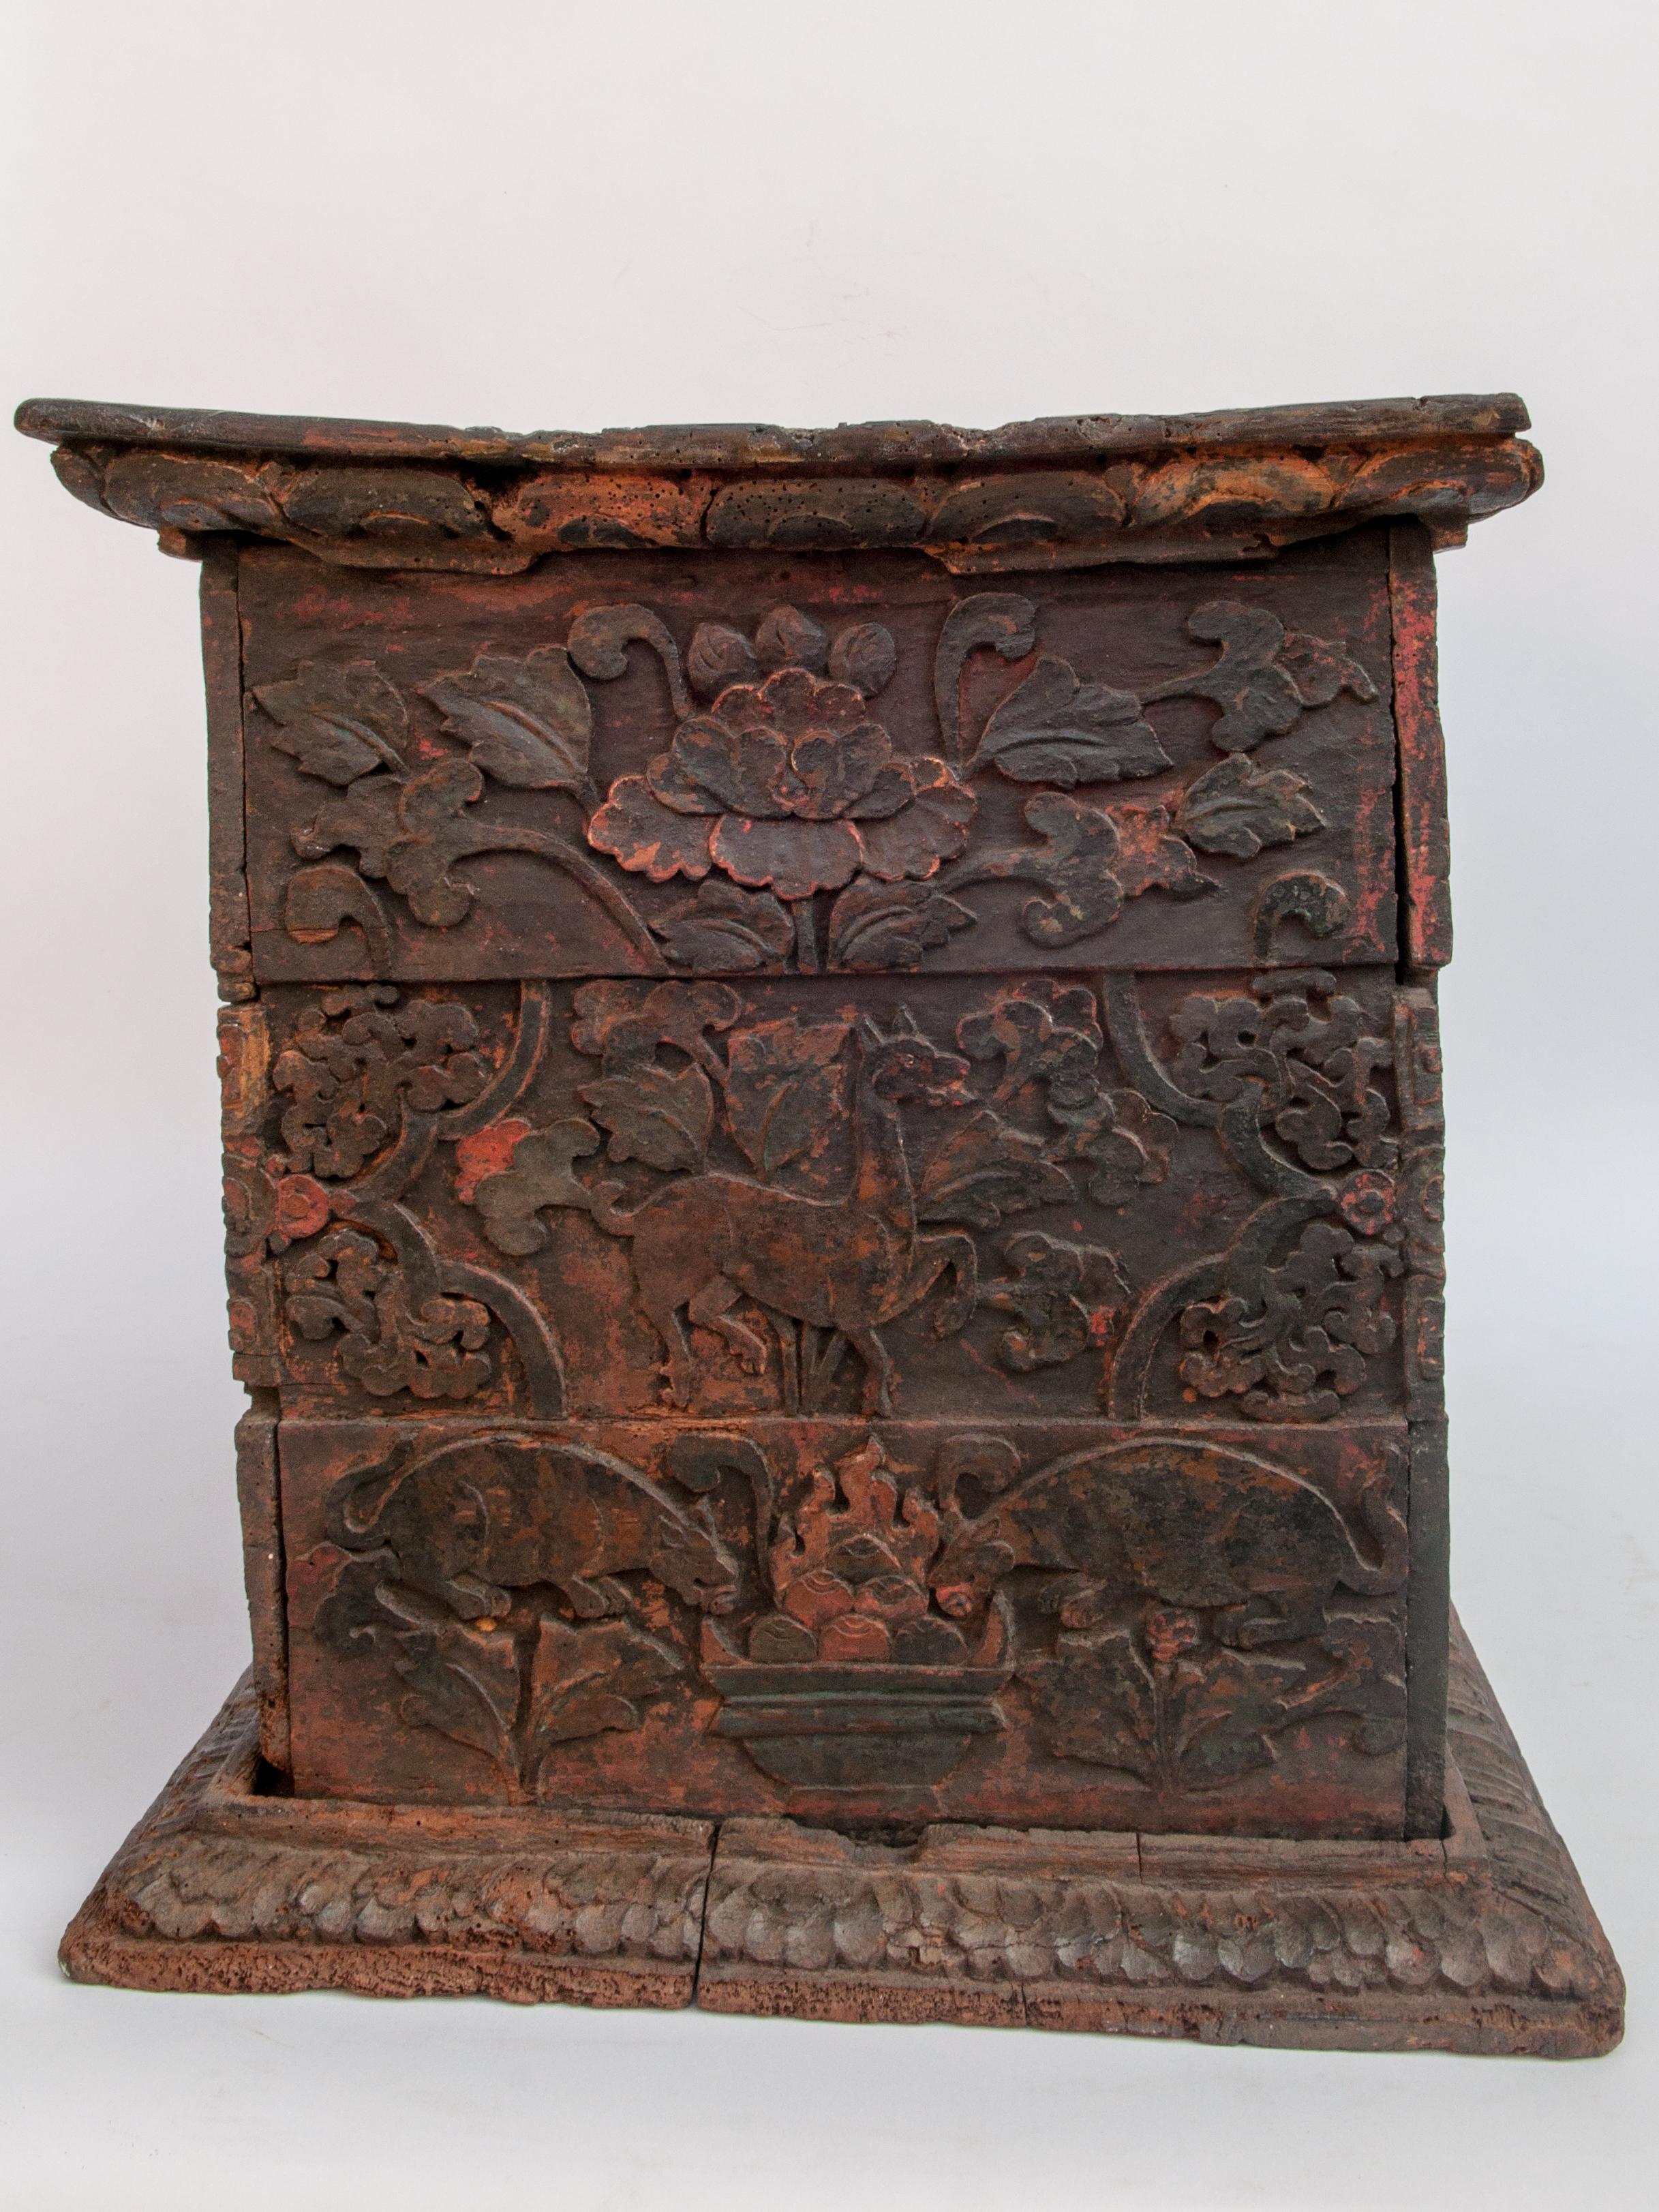 Antique Tibetan Style Religious Storage Box from Bhutan, 19th Century or Earlier 6